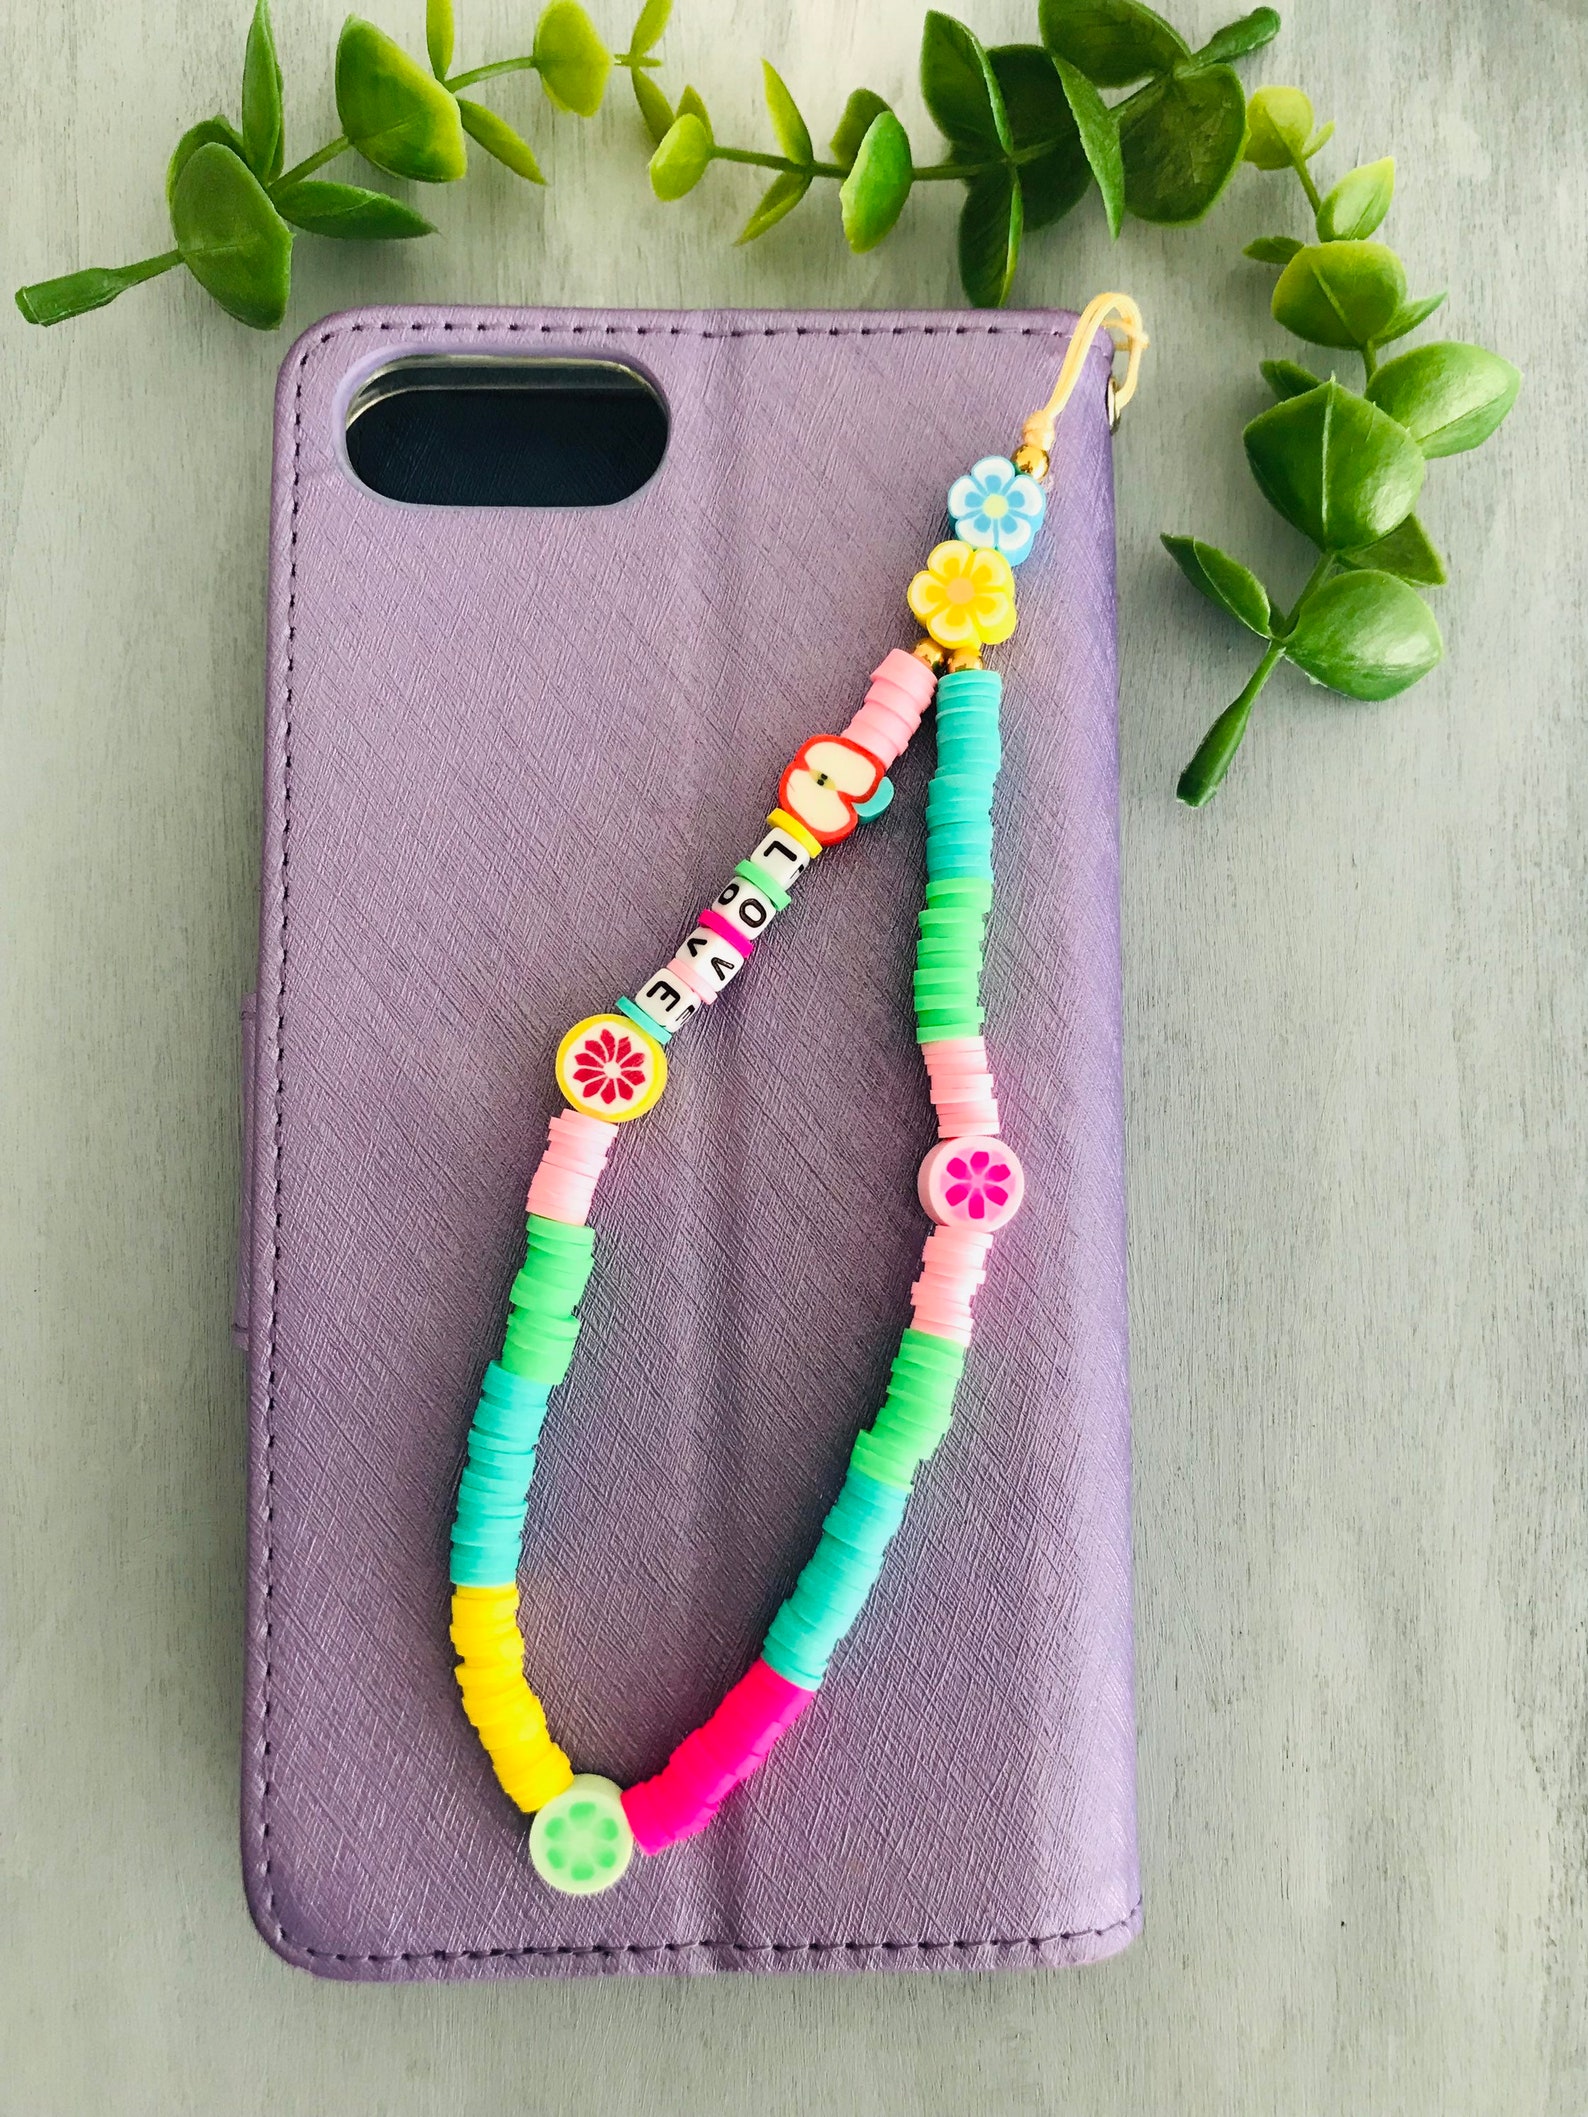 Acrylic Beads Mobile Phone Chain phone charm | Etsy